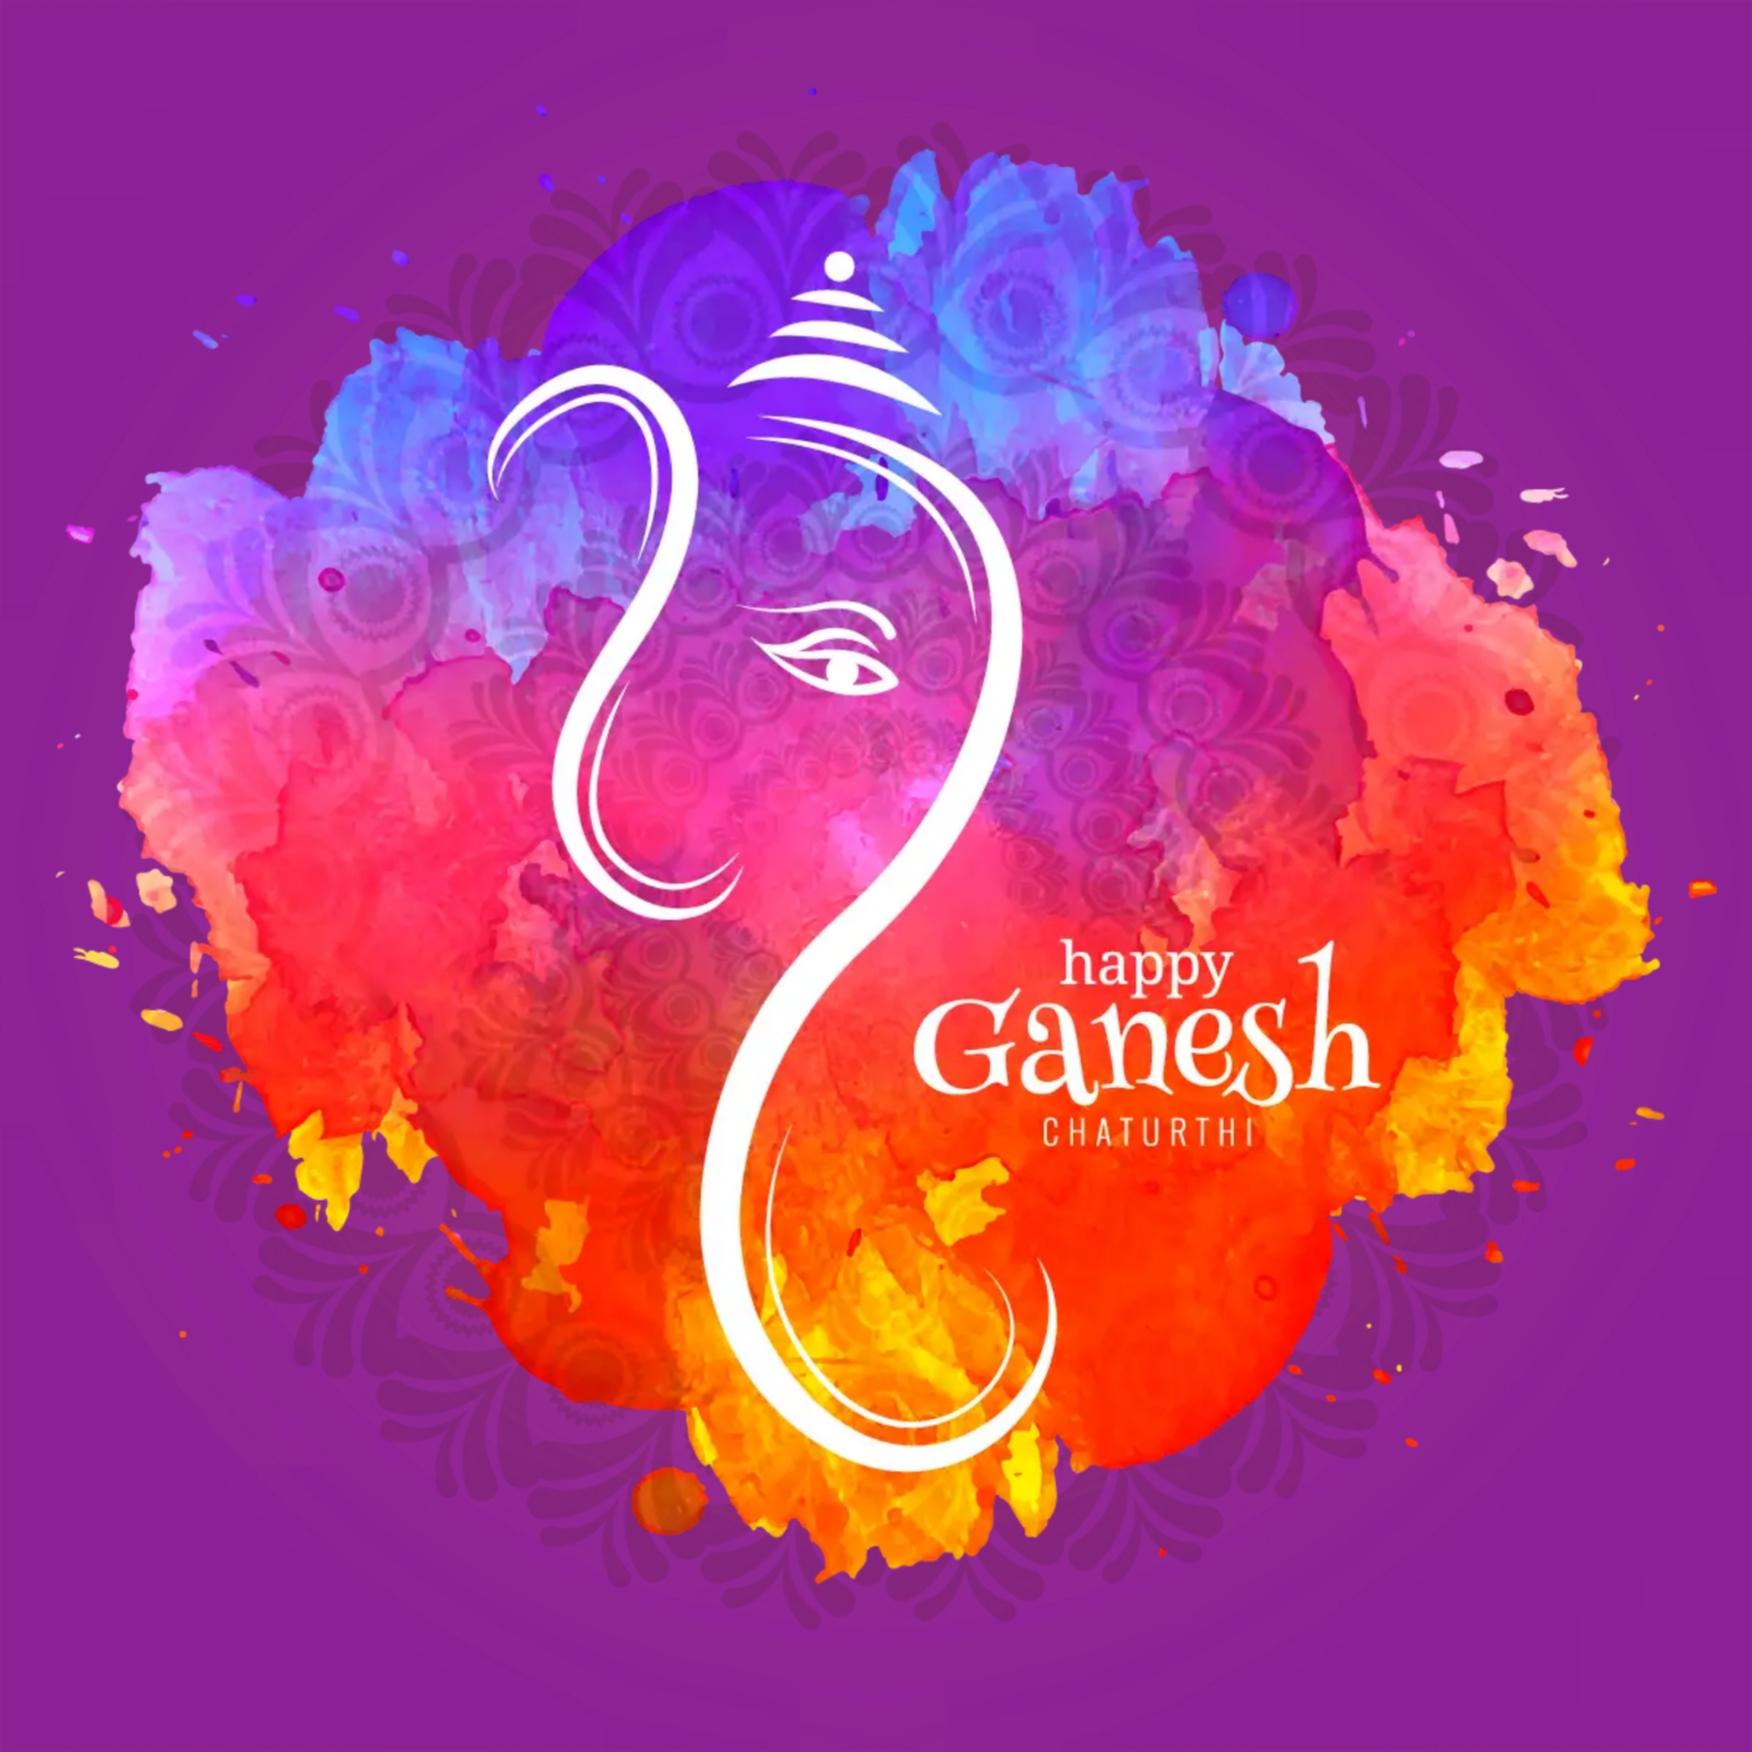 Happy Ganesh Chaturthi Greetings